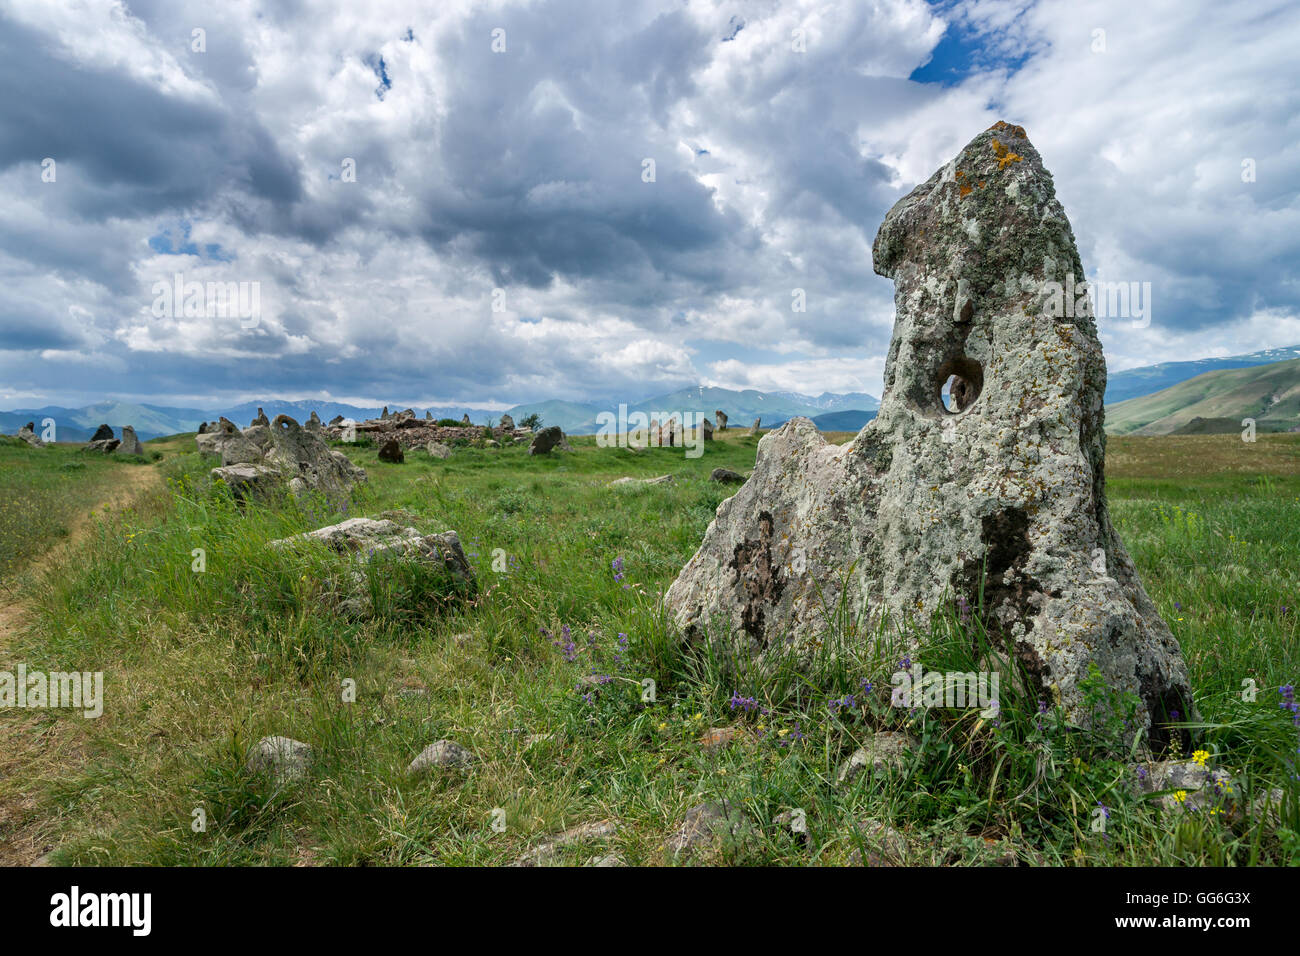 Zorats Karer sitio megalítico en Armenia Foto de stock